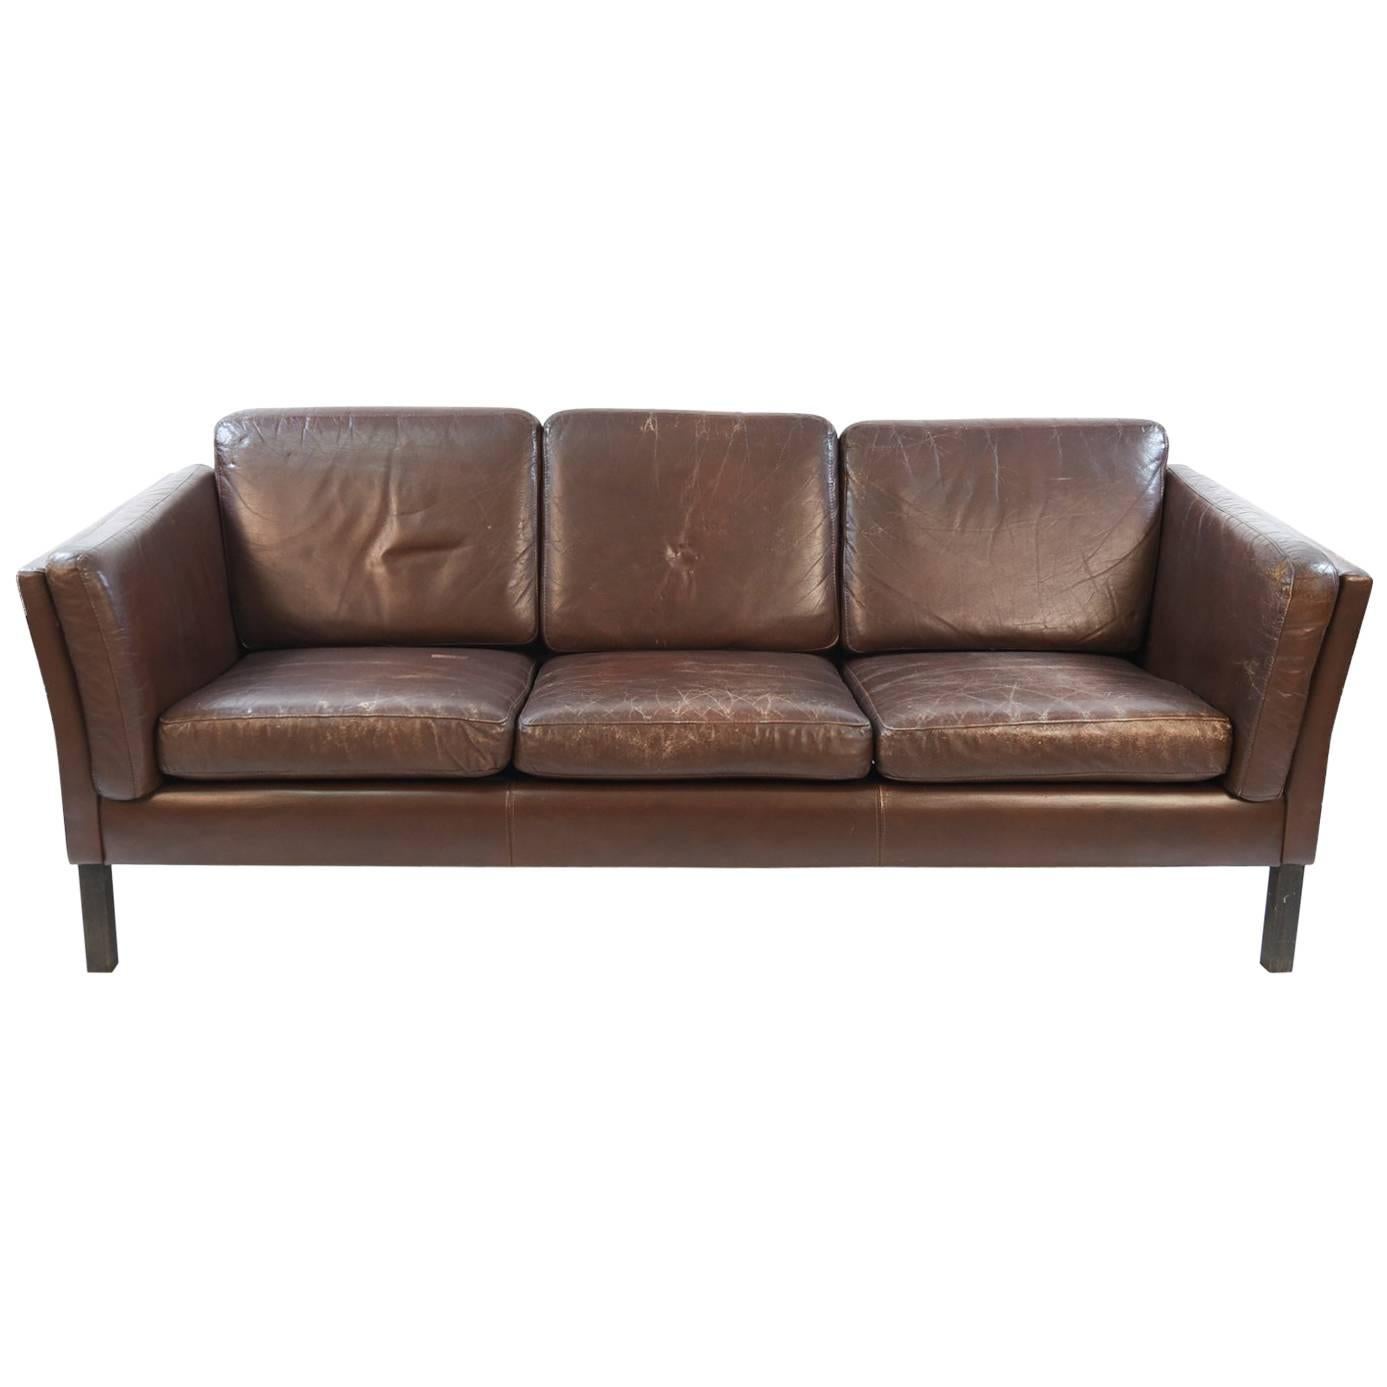 Danish Midcentury Three-Seat Sofa in Chocolate Brown Leather